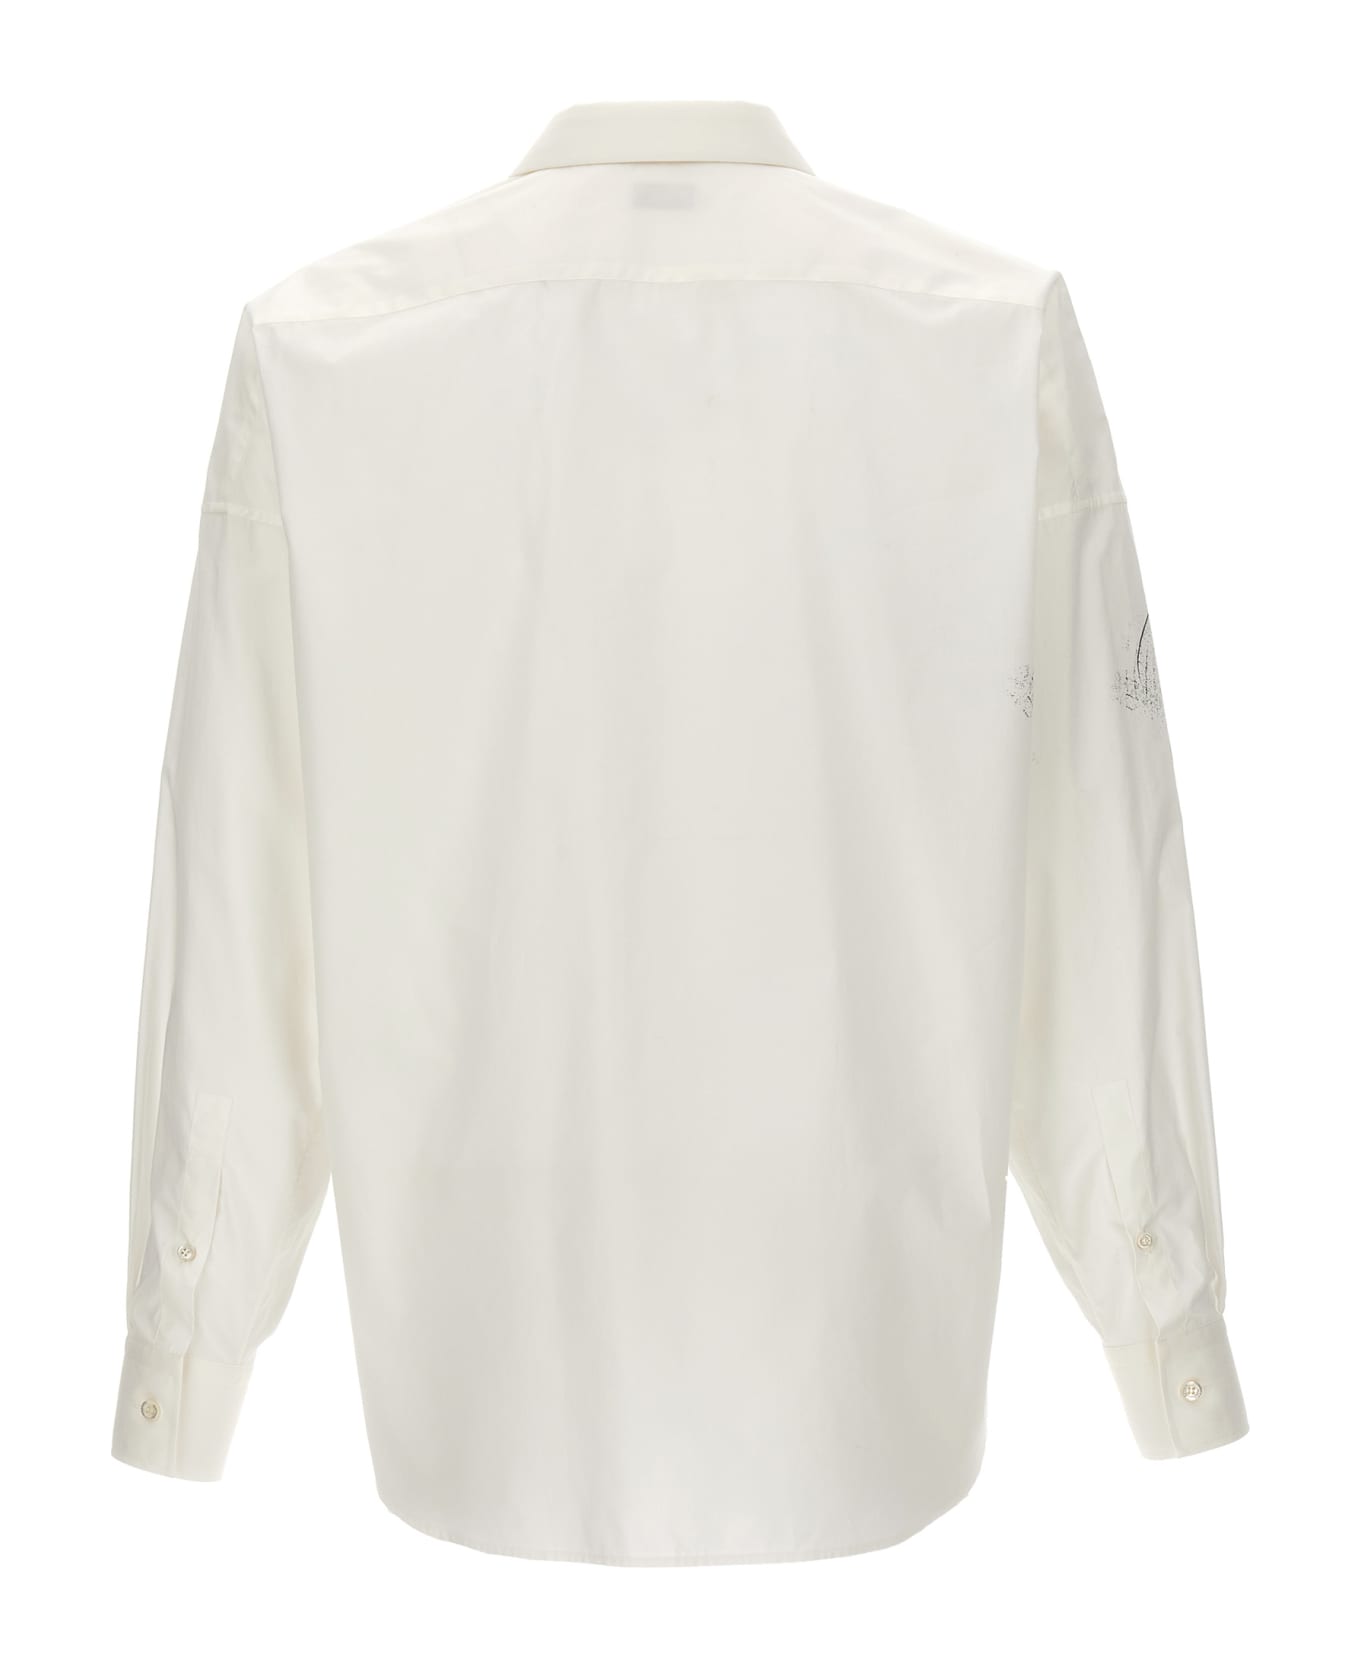 Alexander McQueen Printed Shirt - White/Black